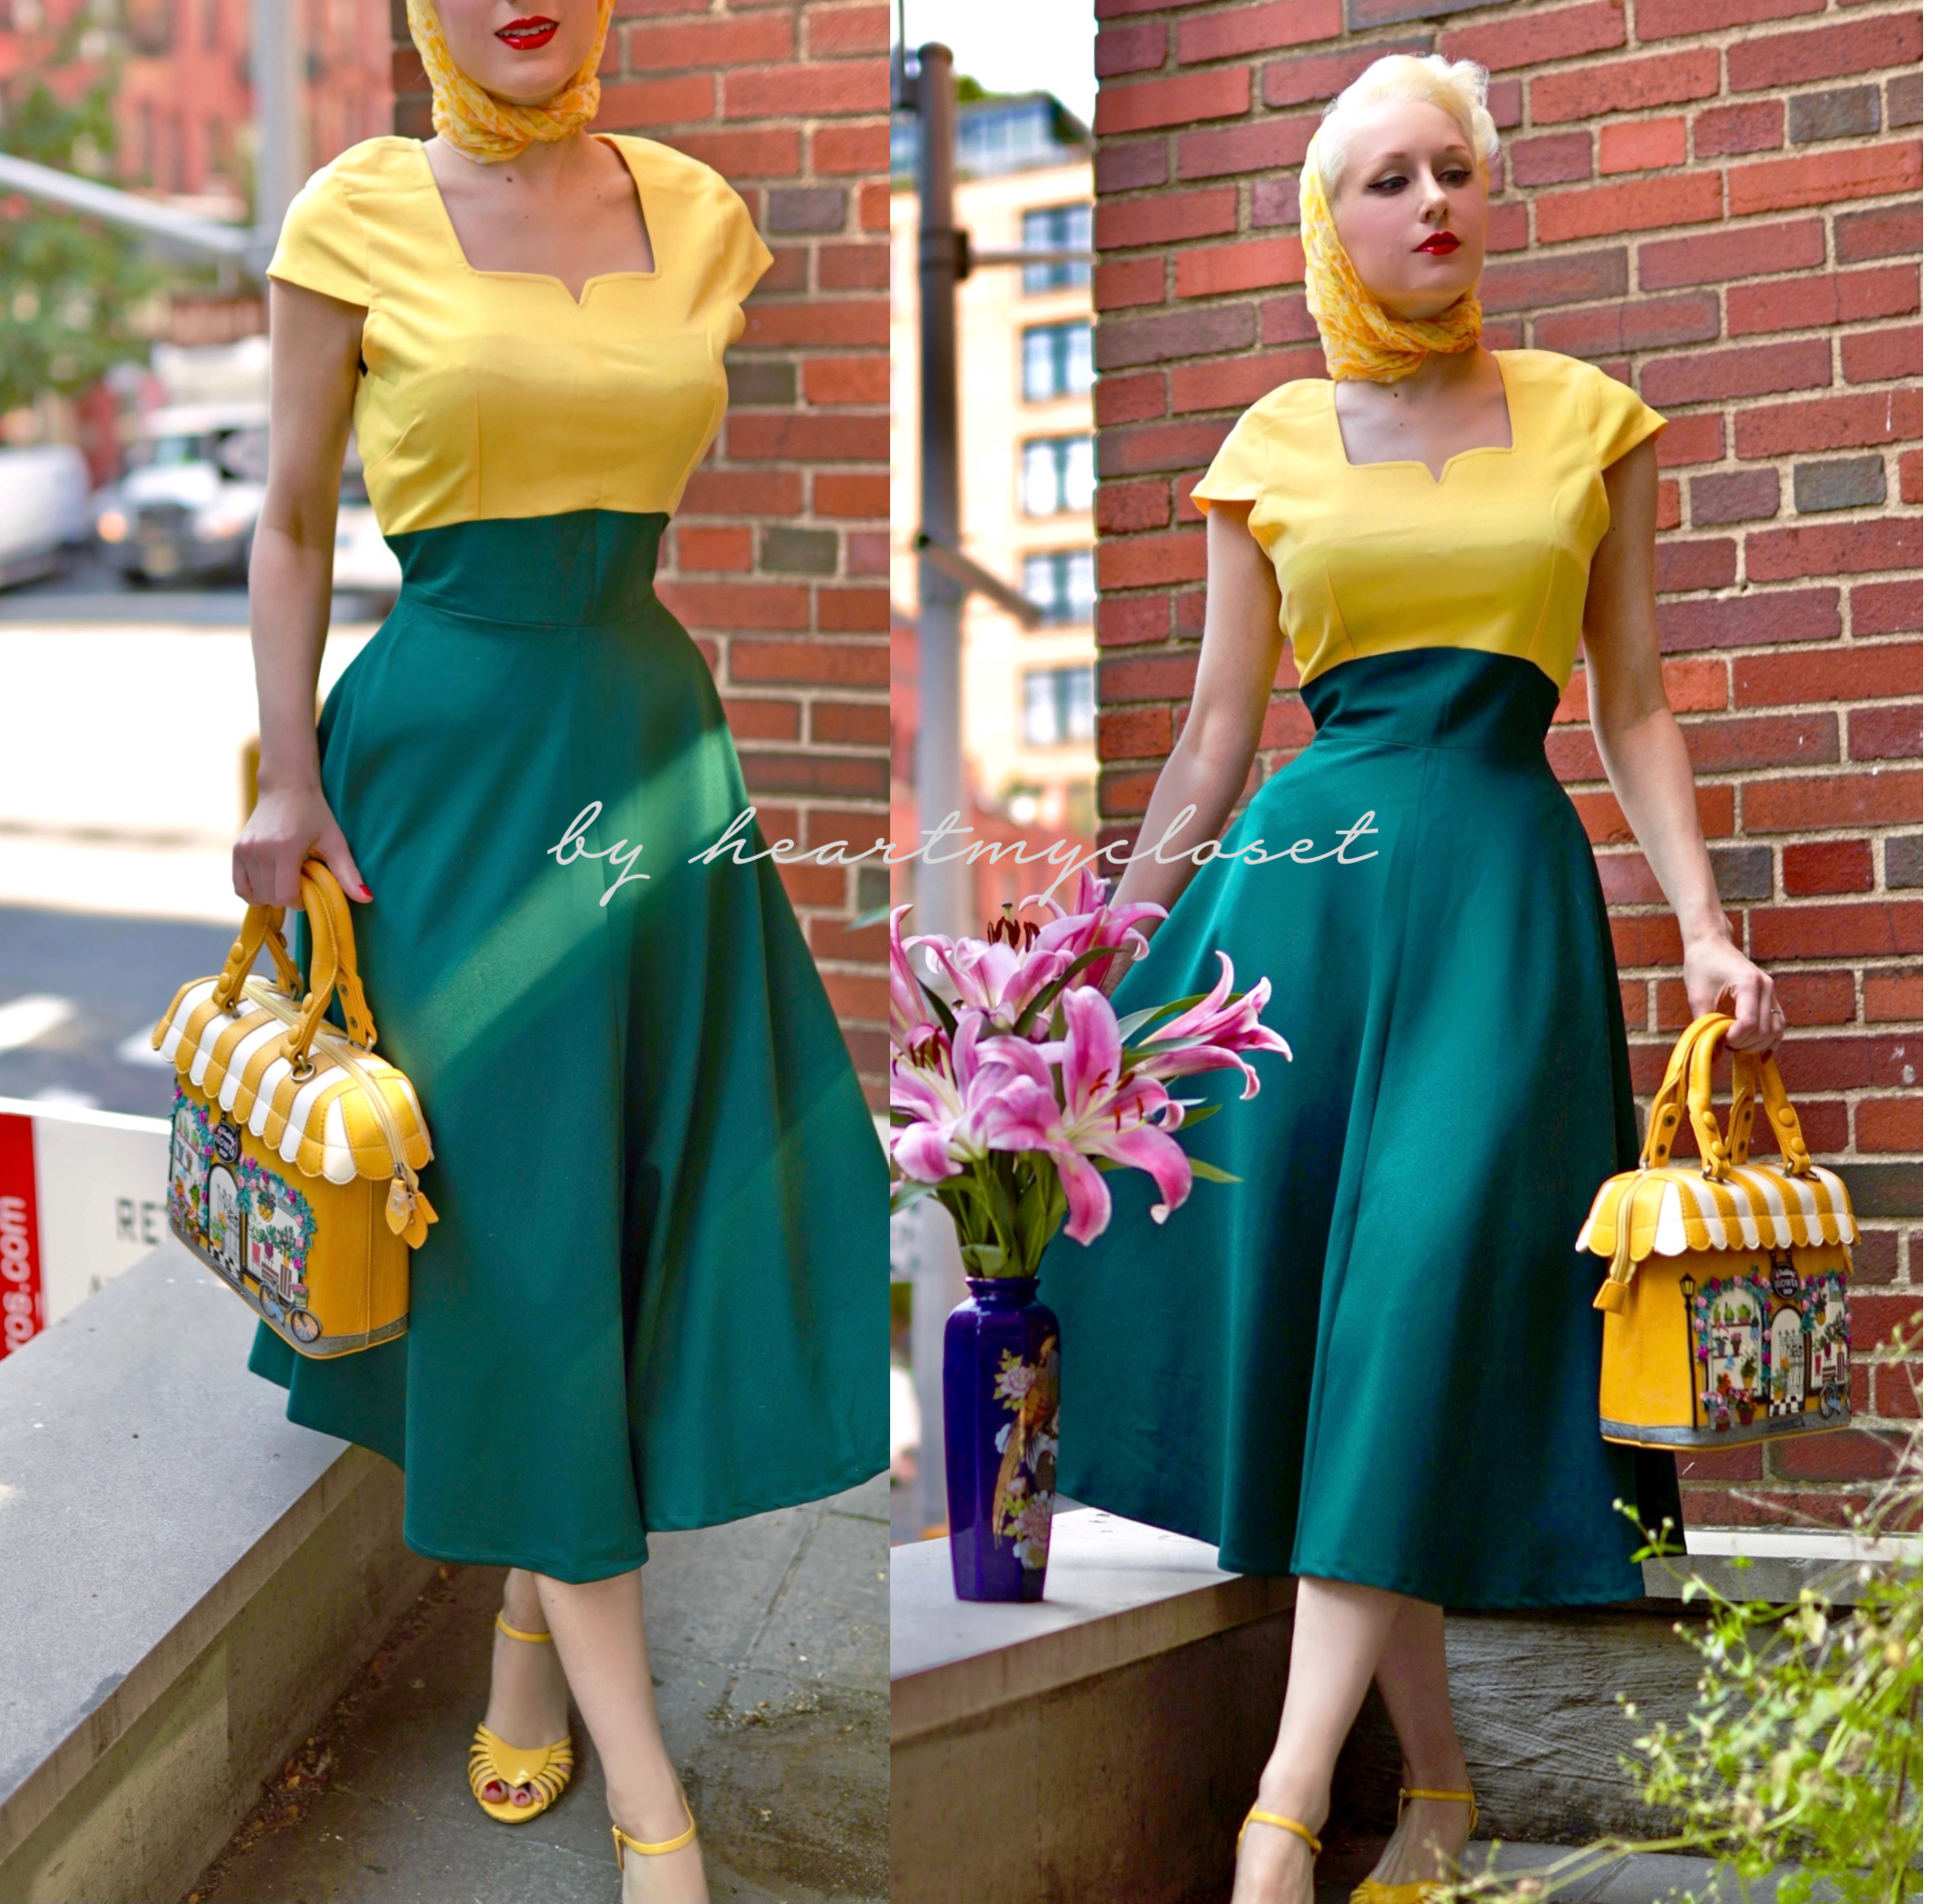 60s style dresses